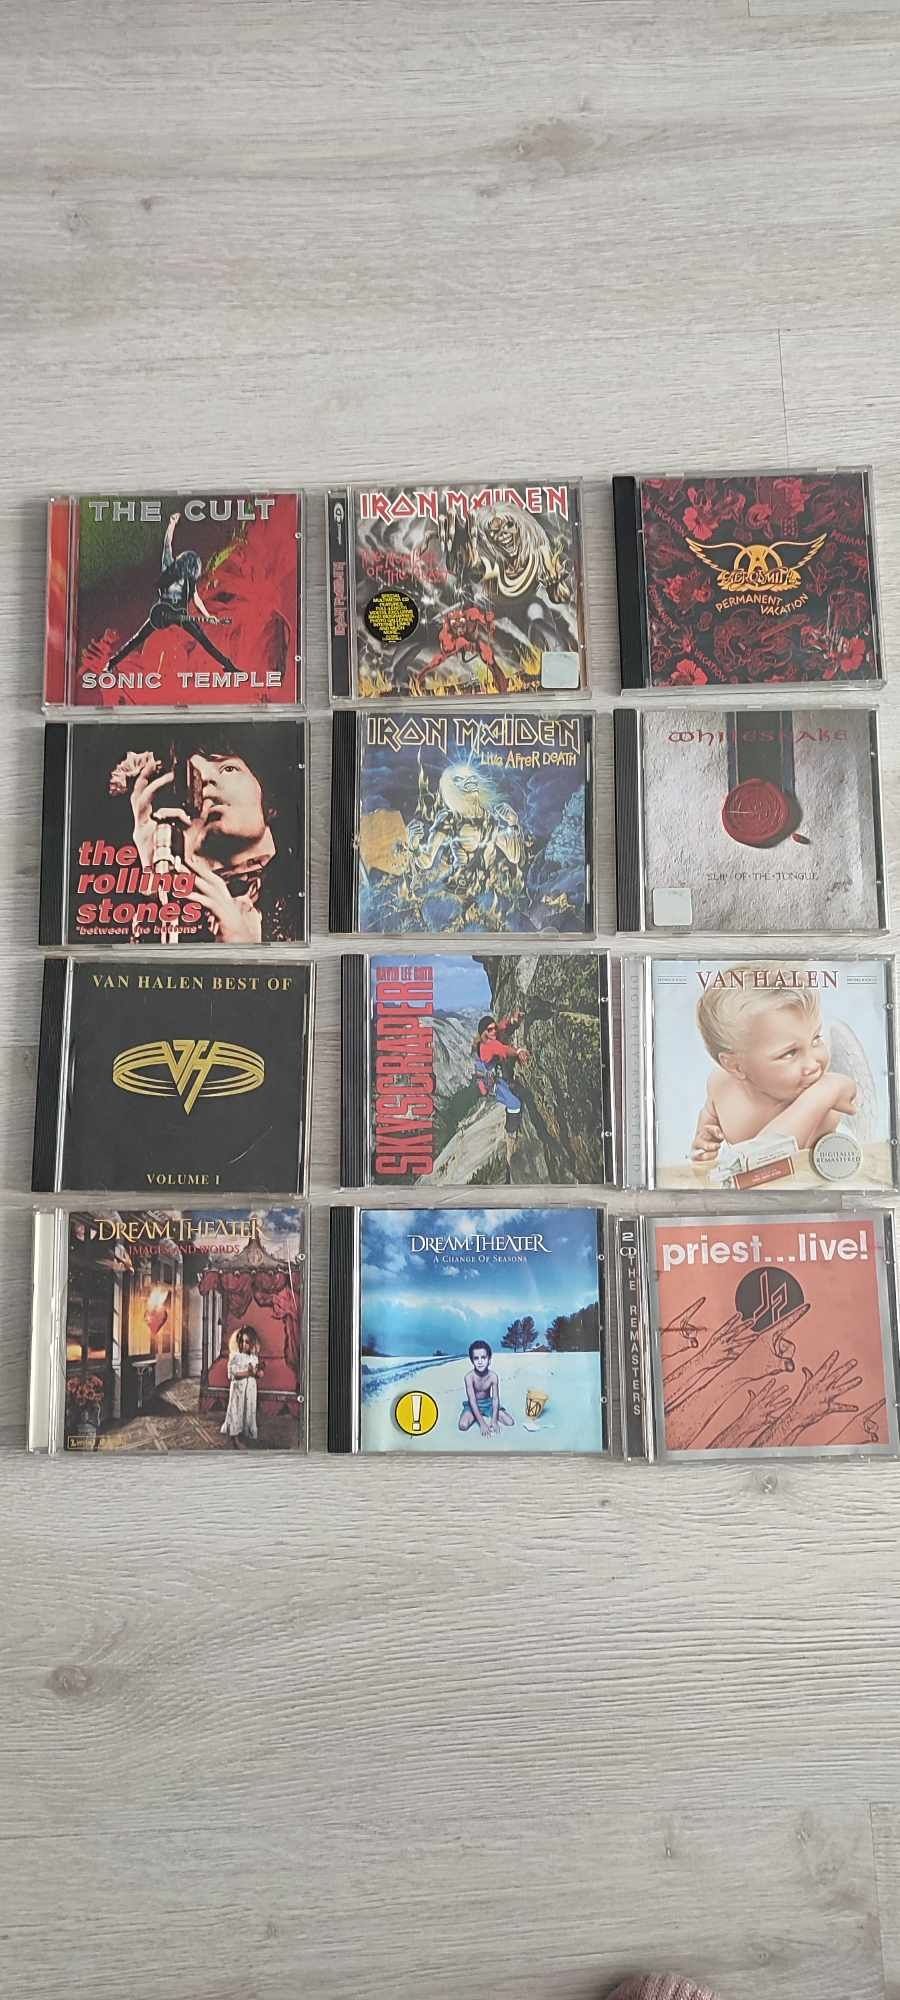 Kolekcja płyt CD(od 15 do 50zł),Iron Maiden,Rollig Stones ,Cult.Lady p